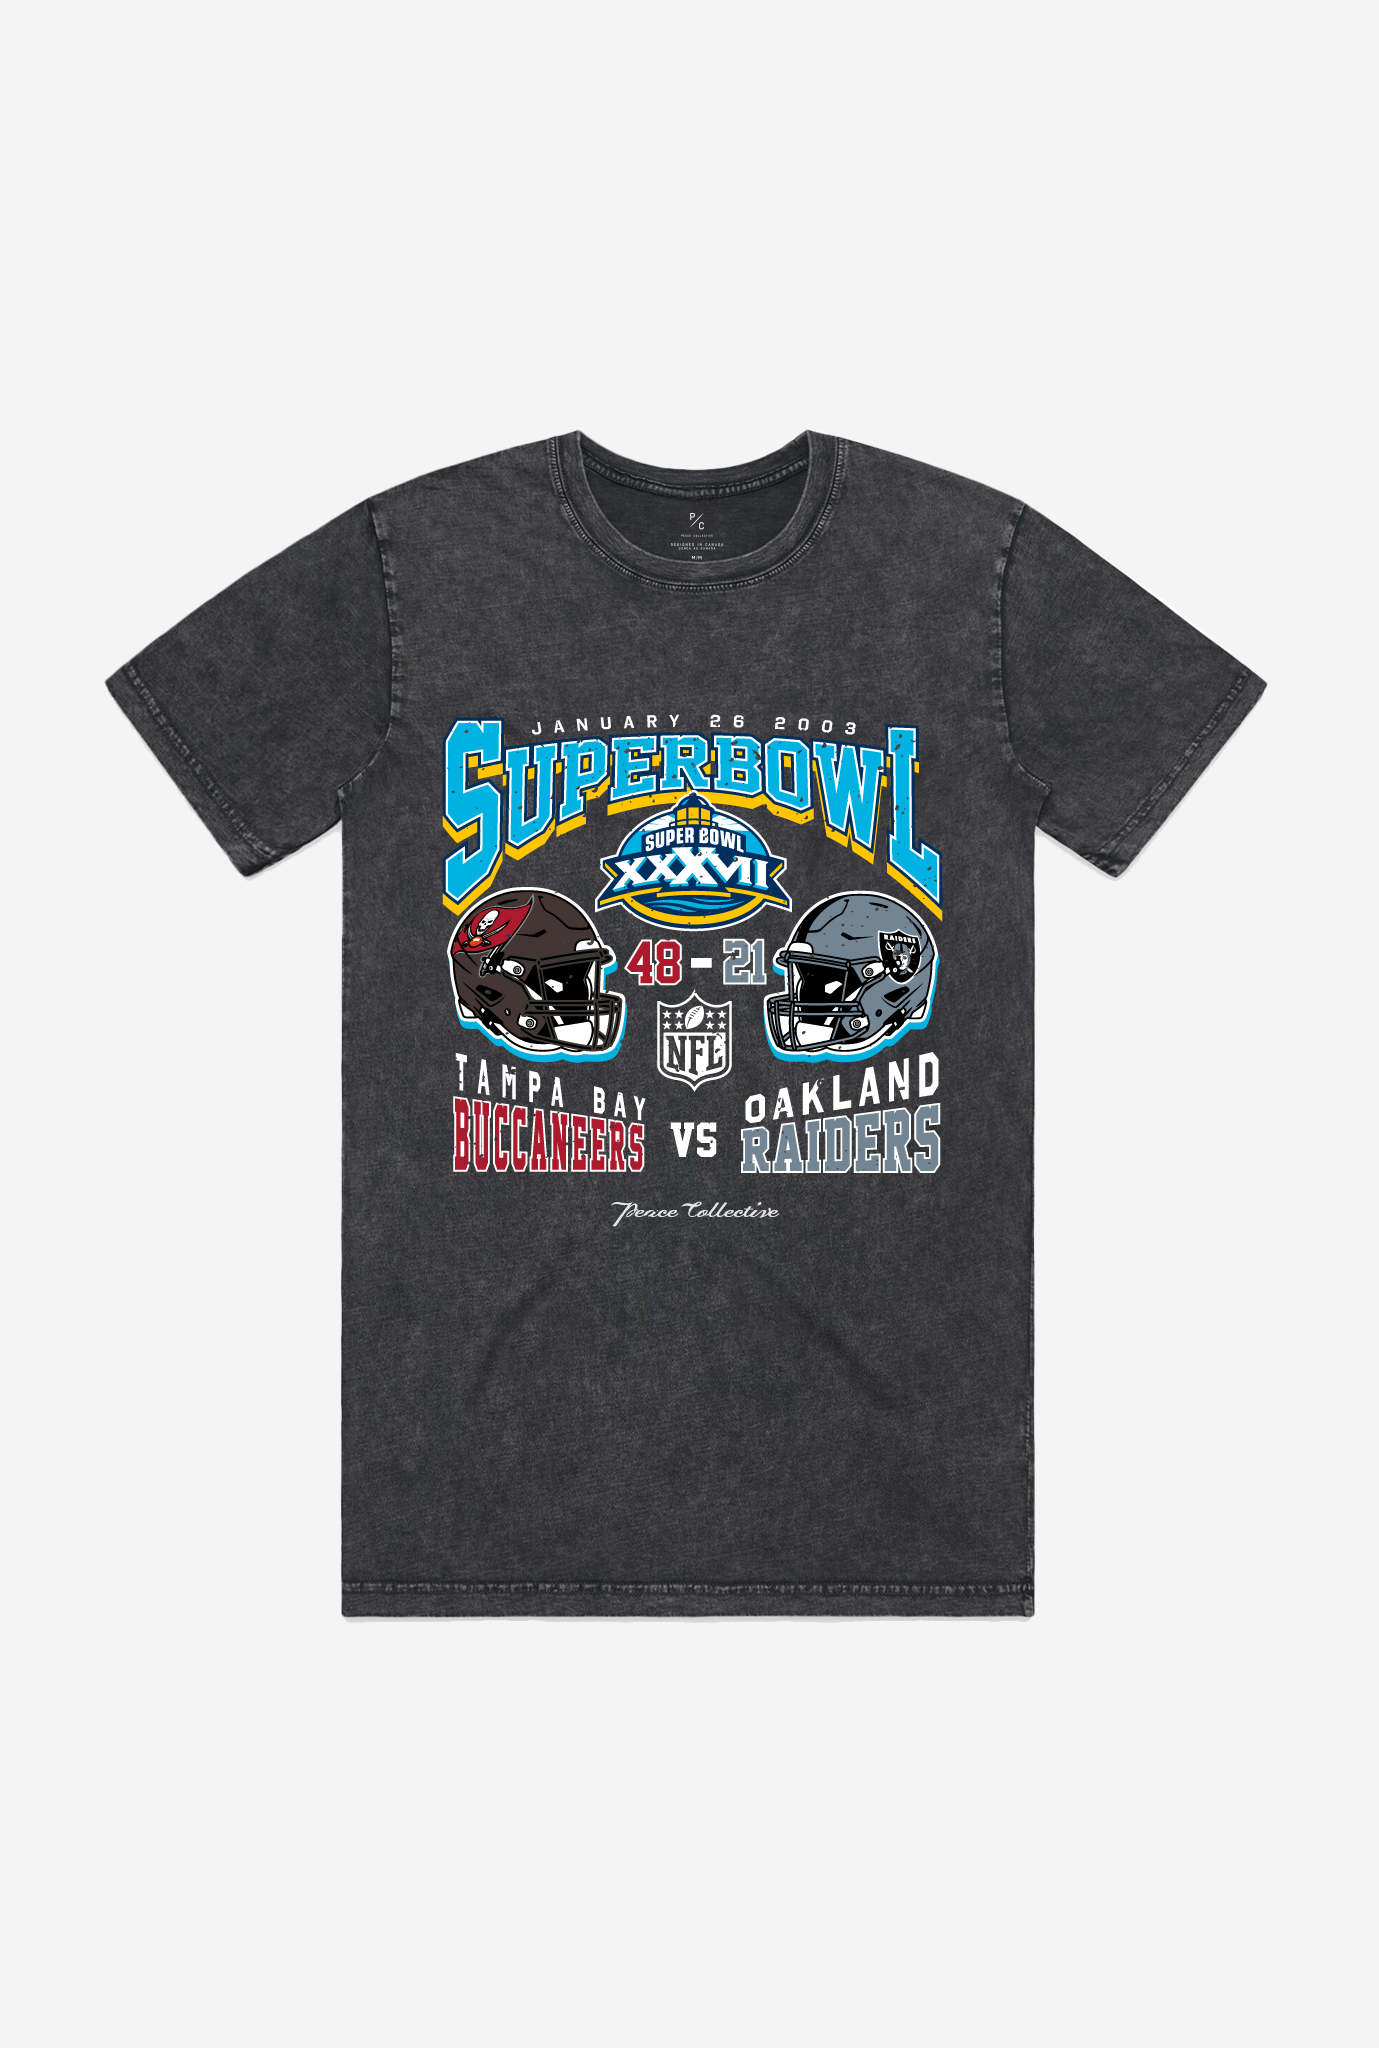 Super Bowl XXXVII: Tampa Bay Buccaneers vs Oakland Raiders Stonewashed T-Shirt - Black